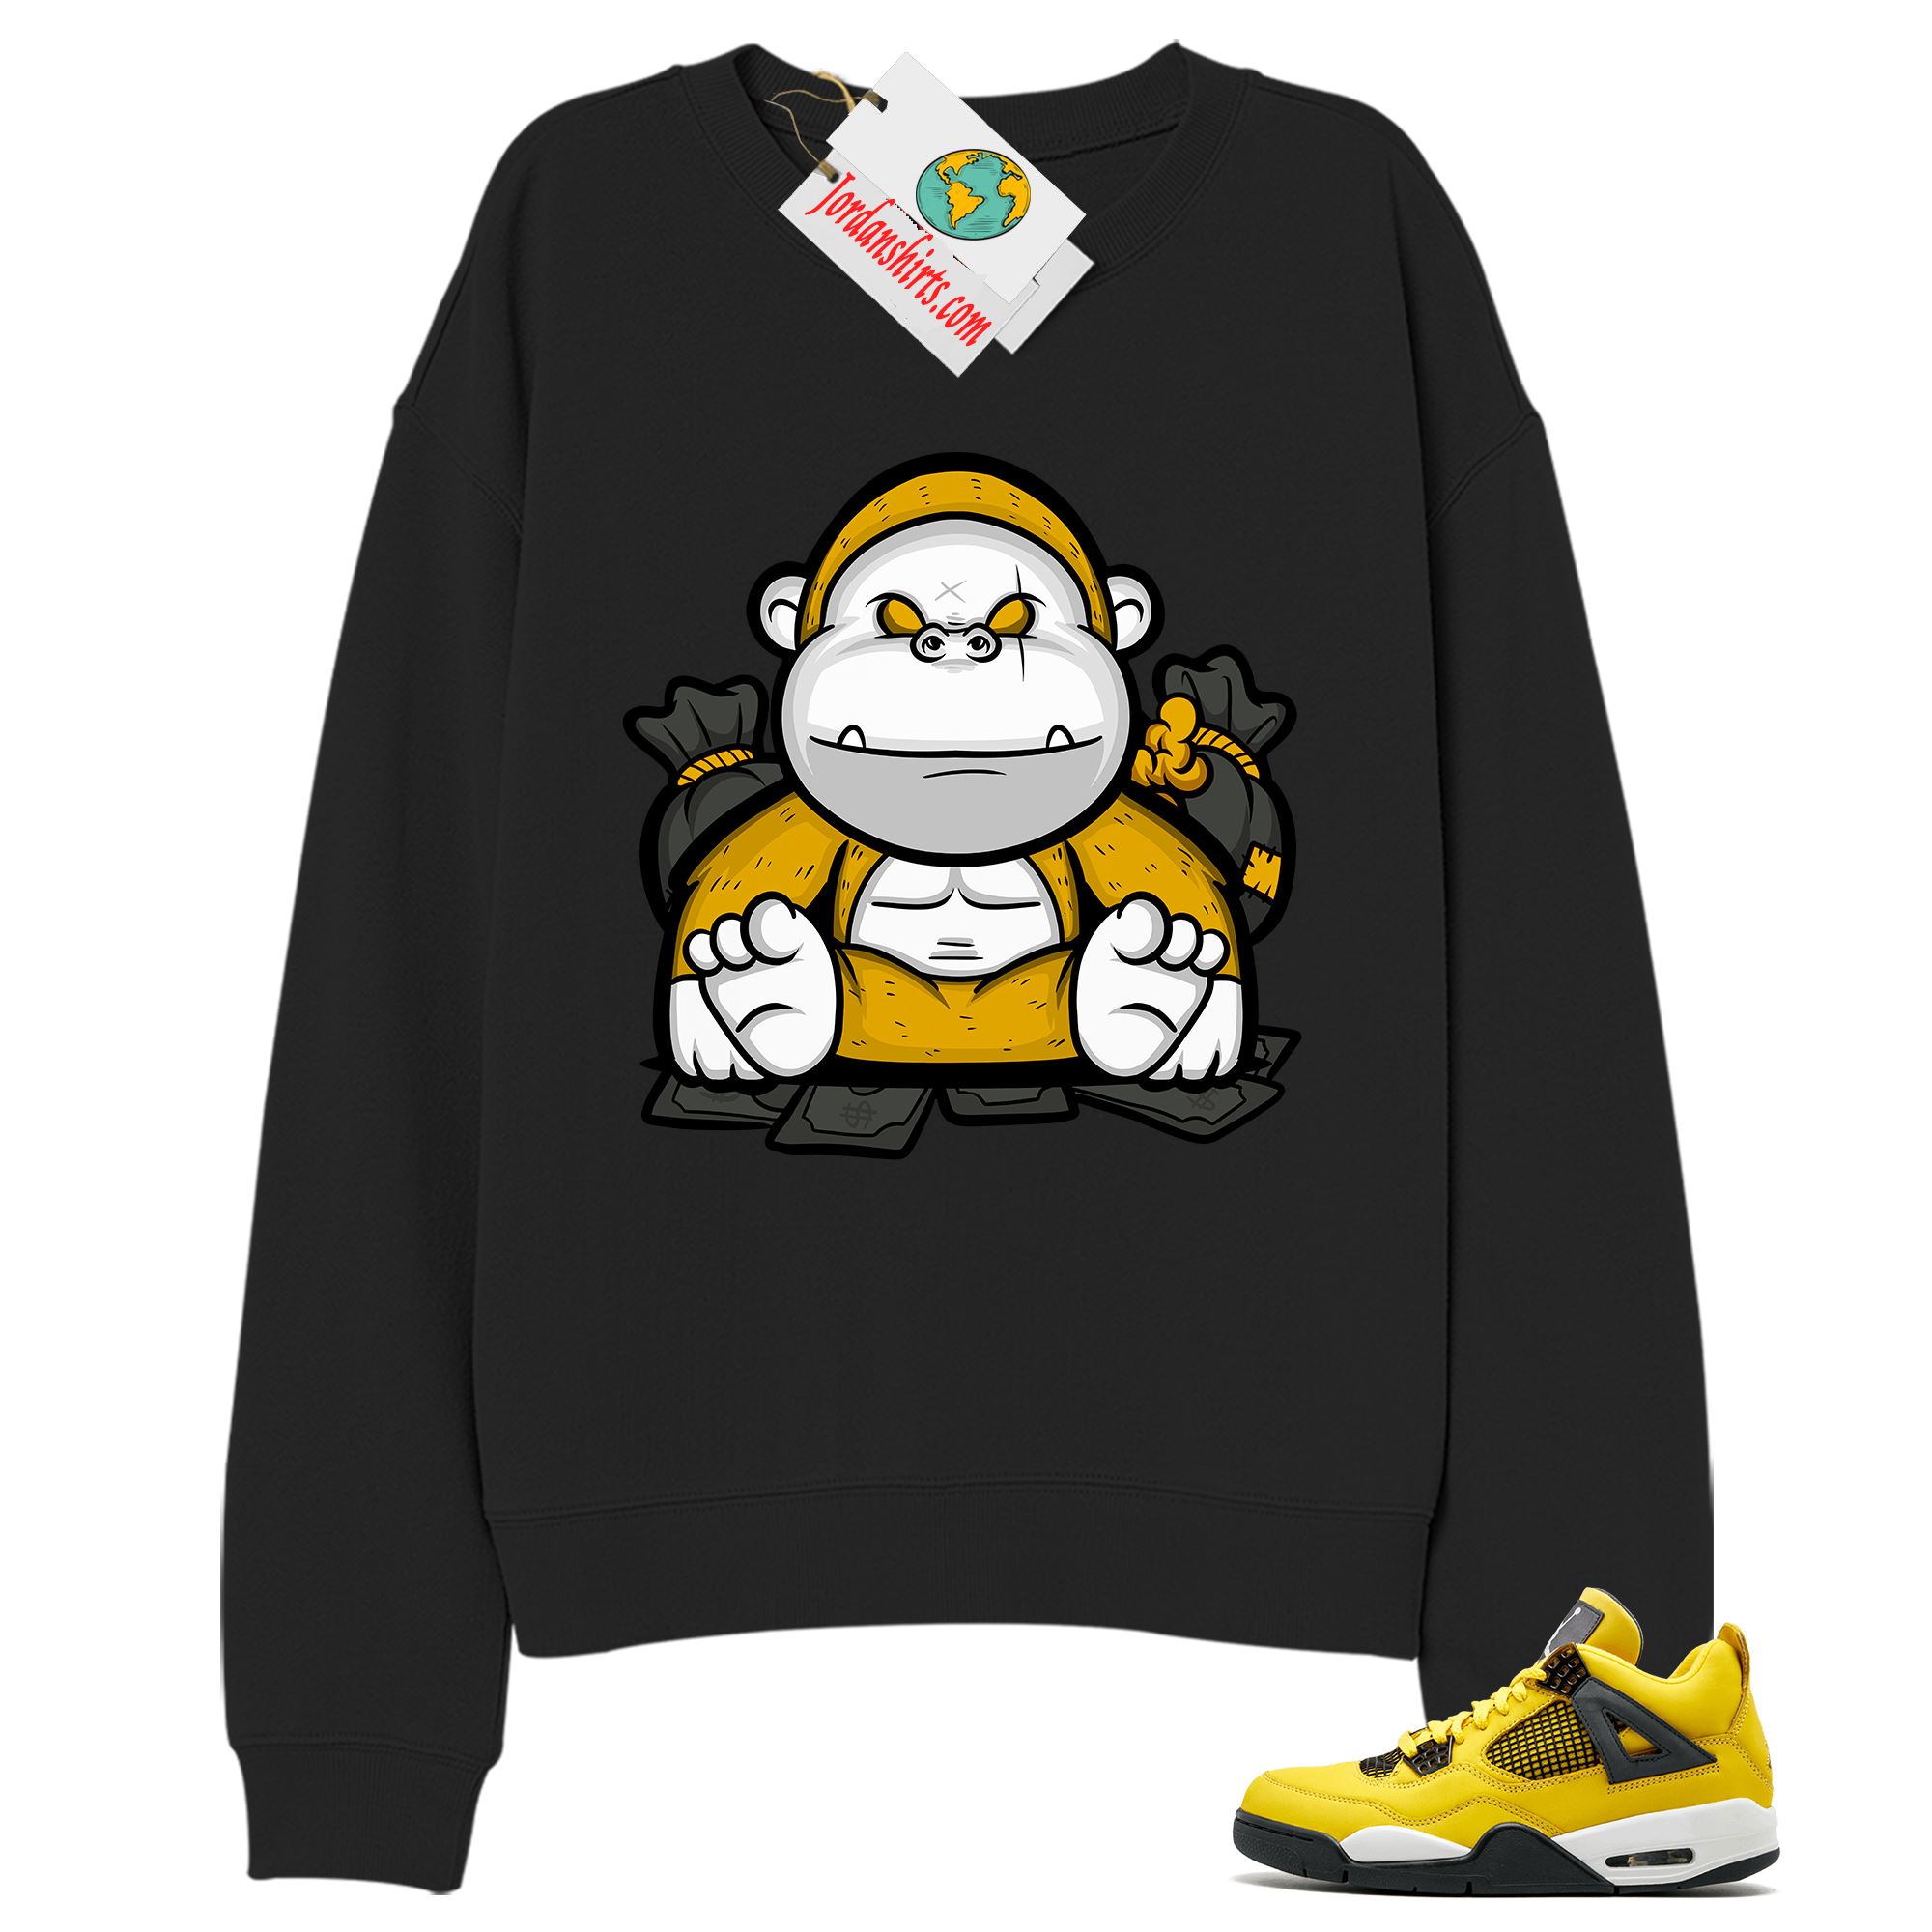 Jordan 4 Sweatshirt, Rich Gorilla With Money Black Sweatshirt Air Jordan 4 Tour Yellow Lightning 4s Size Up To 5xl